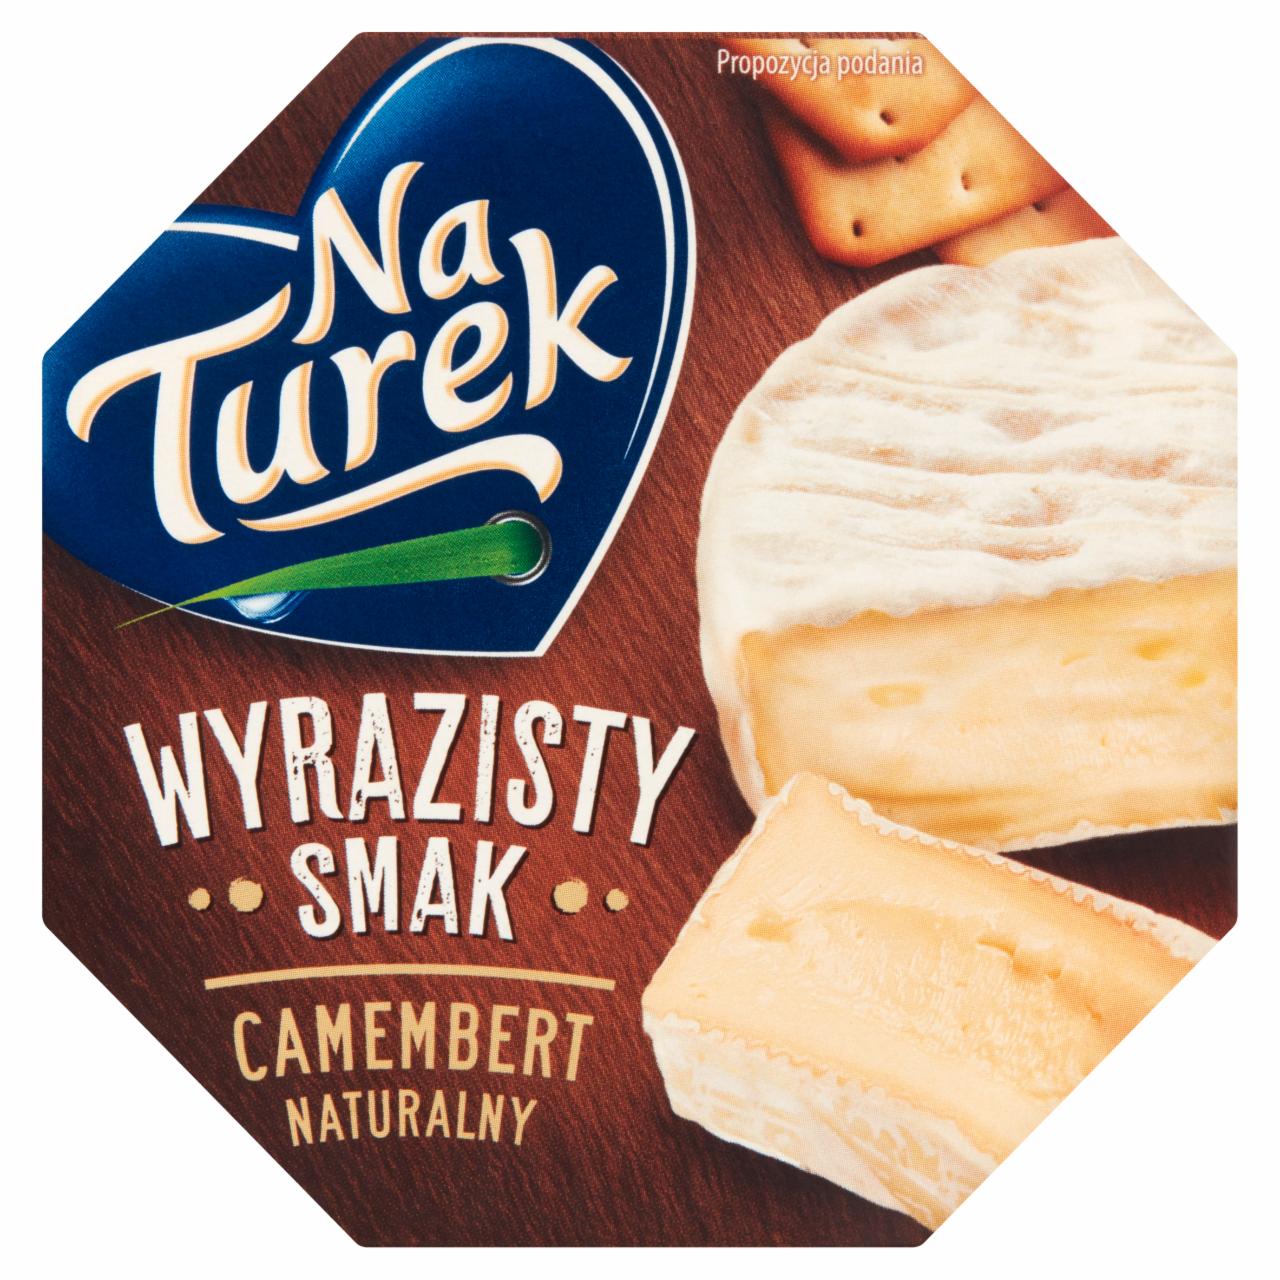 Zdjęcia - NaTurek Camembert naturalny wyrazisty smak 120 g